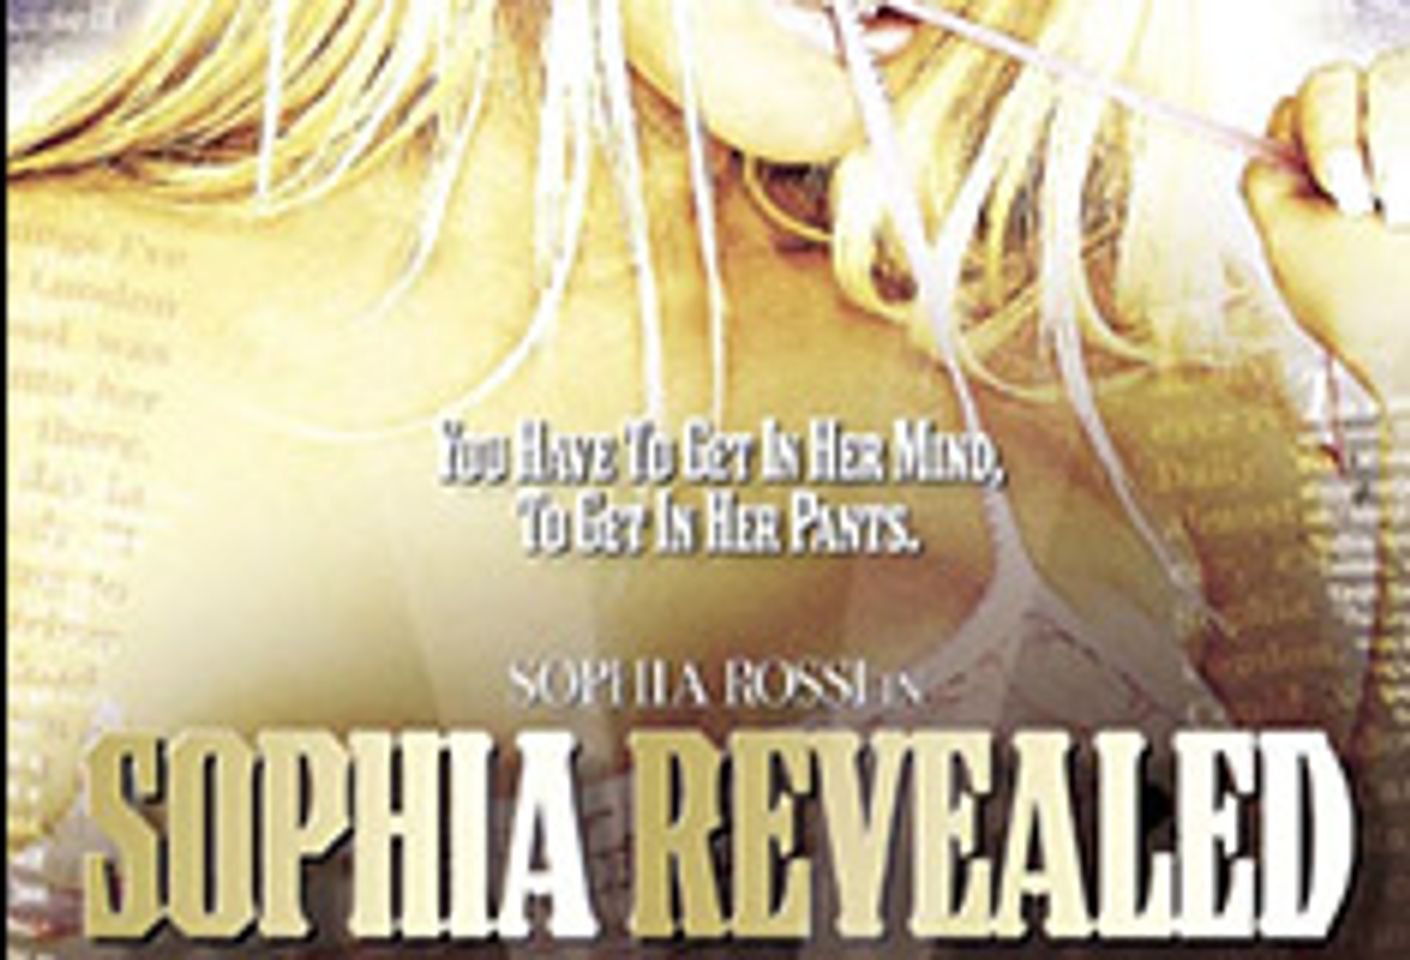 Club Jenna Shows Off the Full Rossi in <i>Sophia Revealed</i>